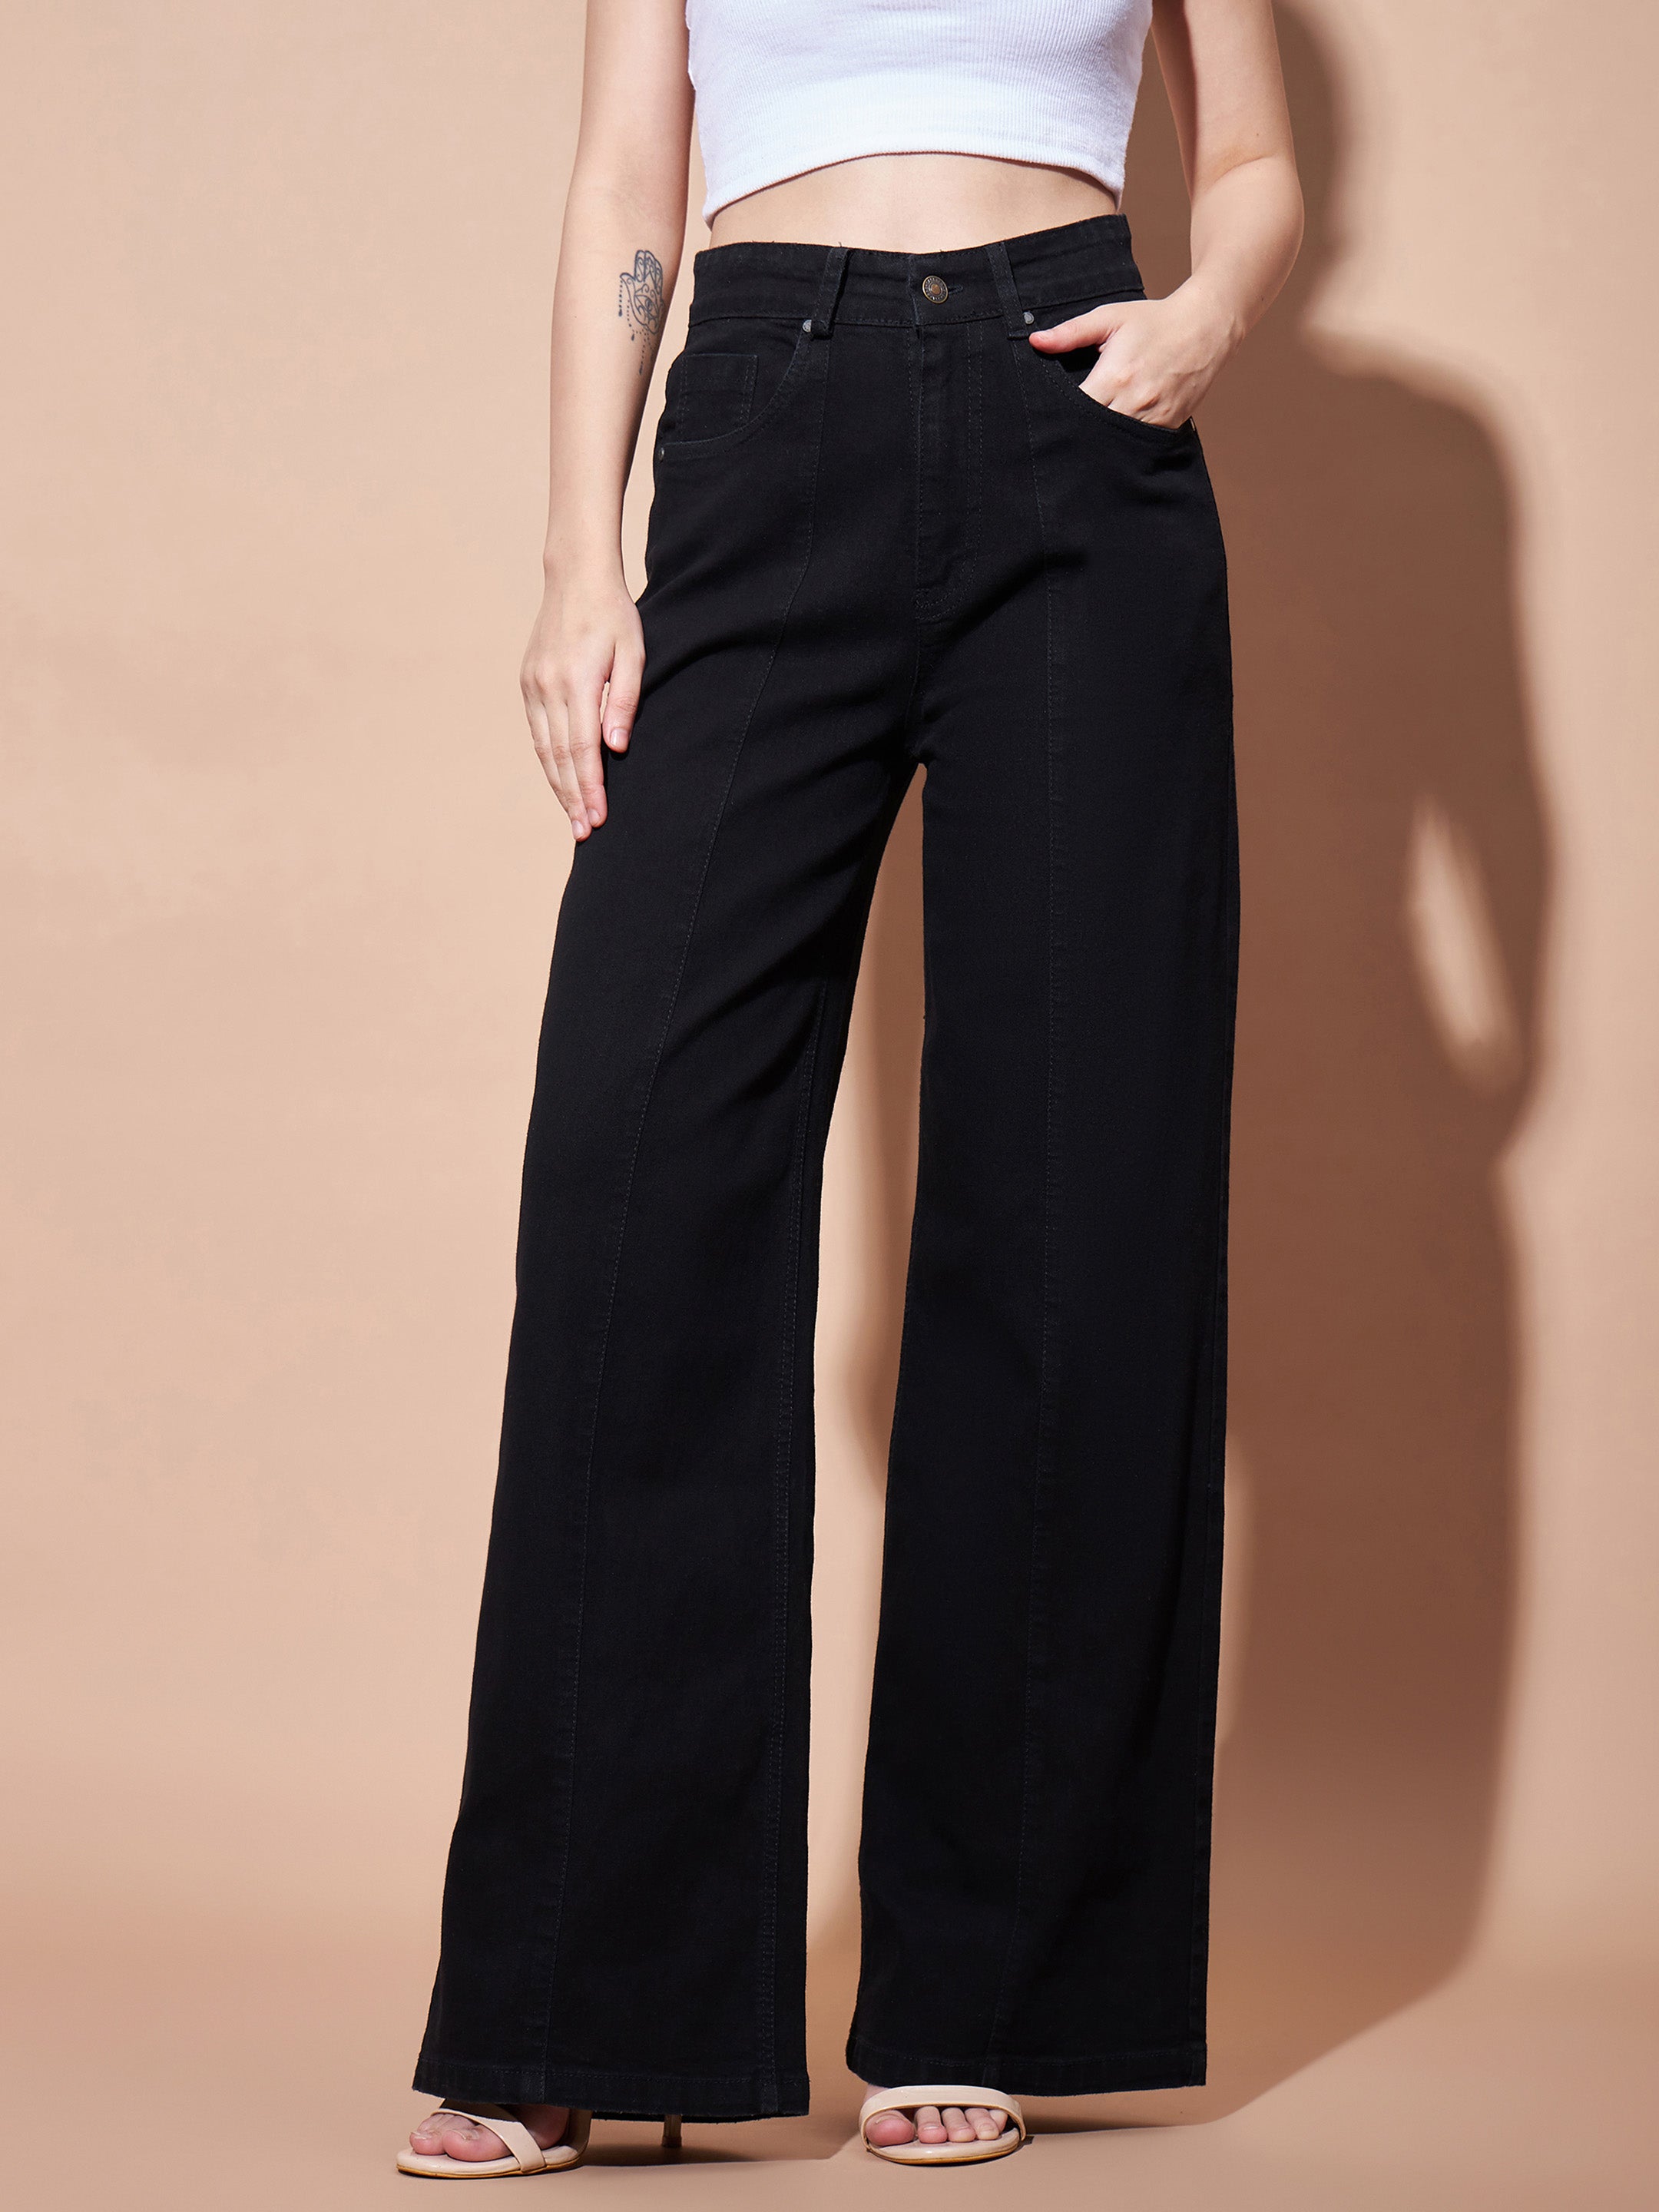 Women's Black High Waist Seam Detail Straight Jeans - Lyush